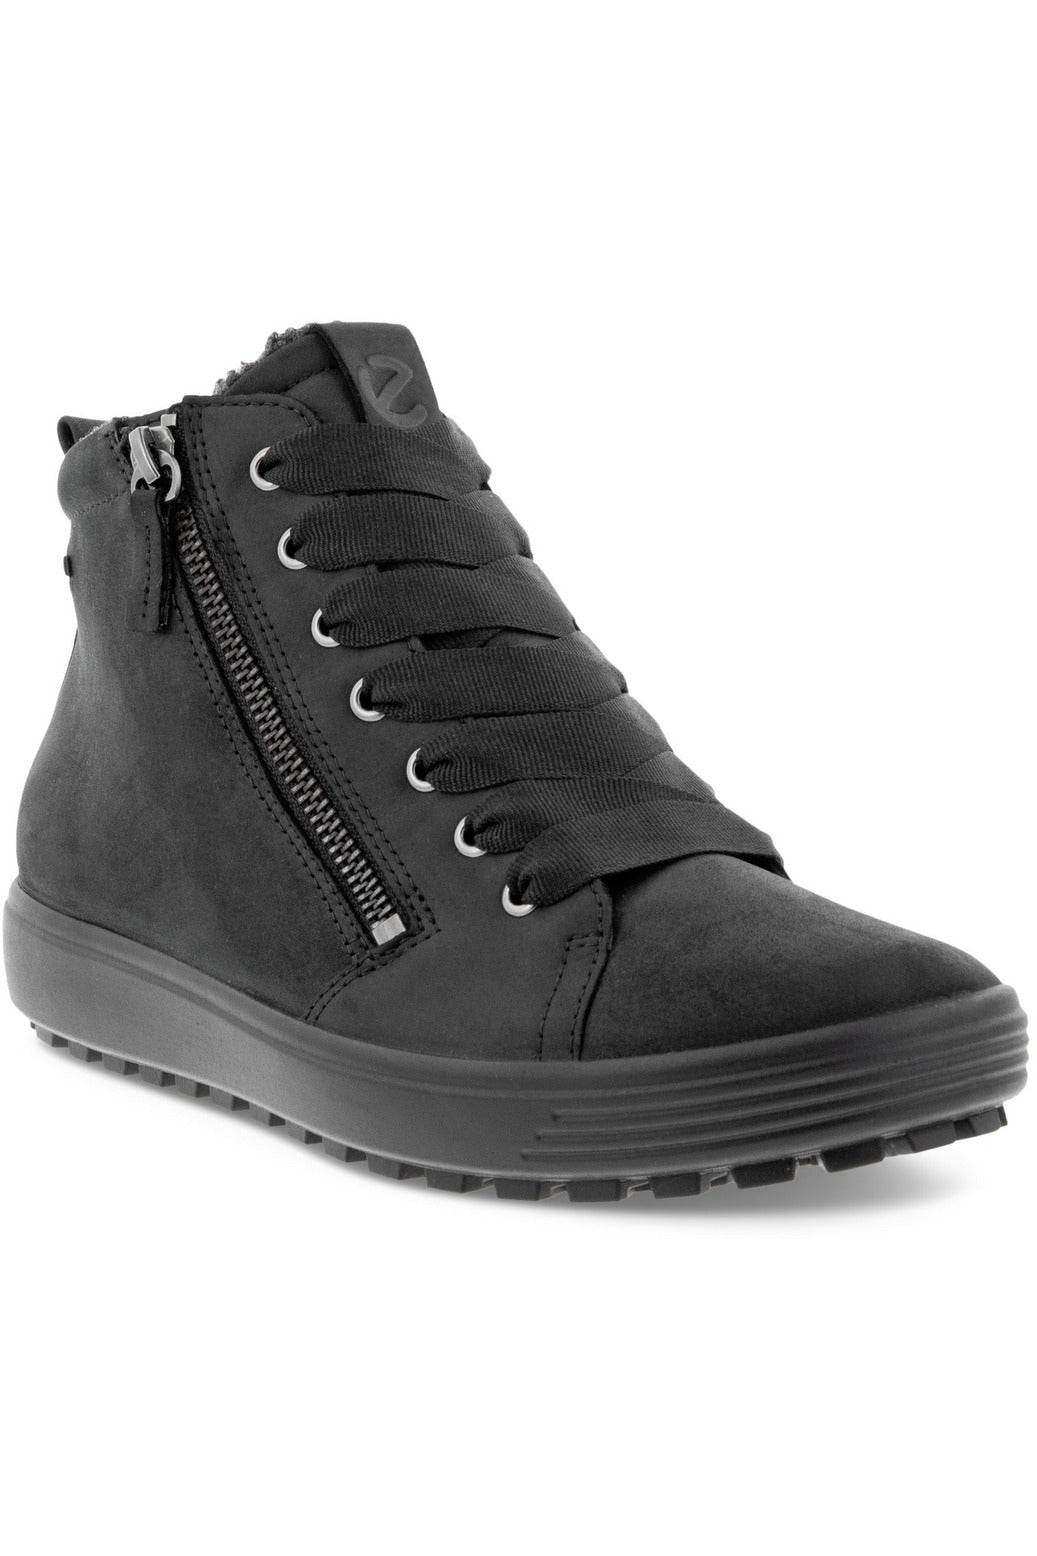 Ecco Soft7 Tred Hi 450163 02001 Black waterproof boot